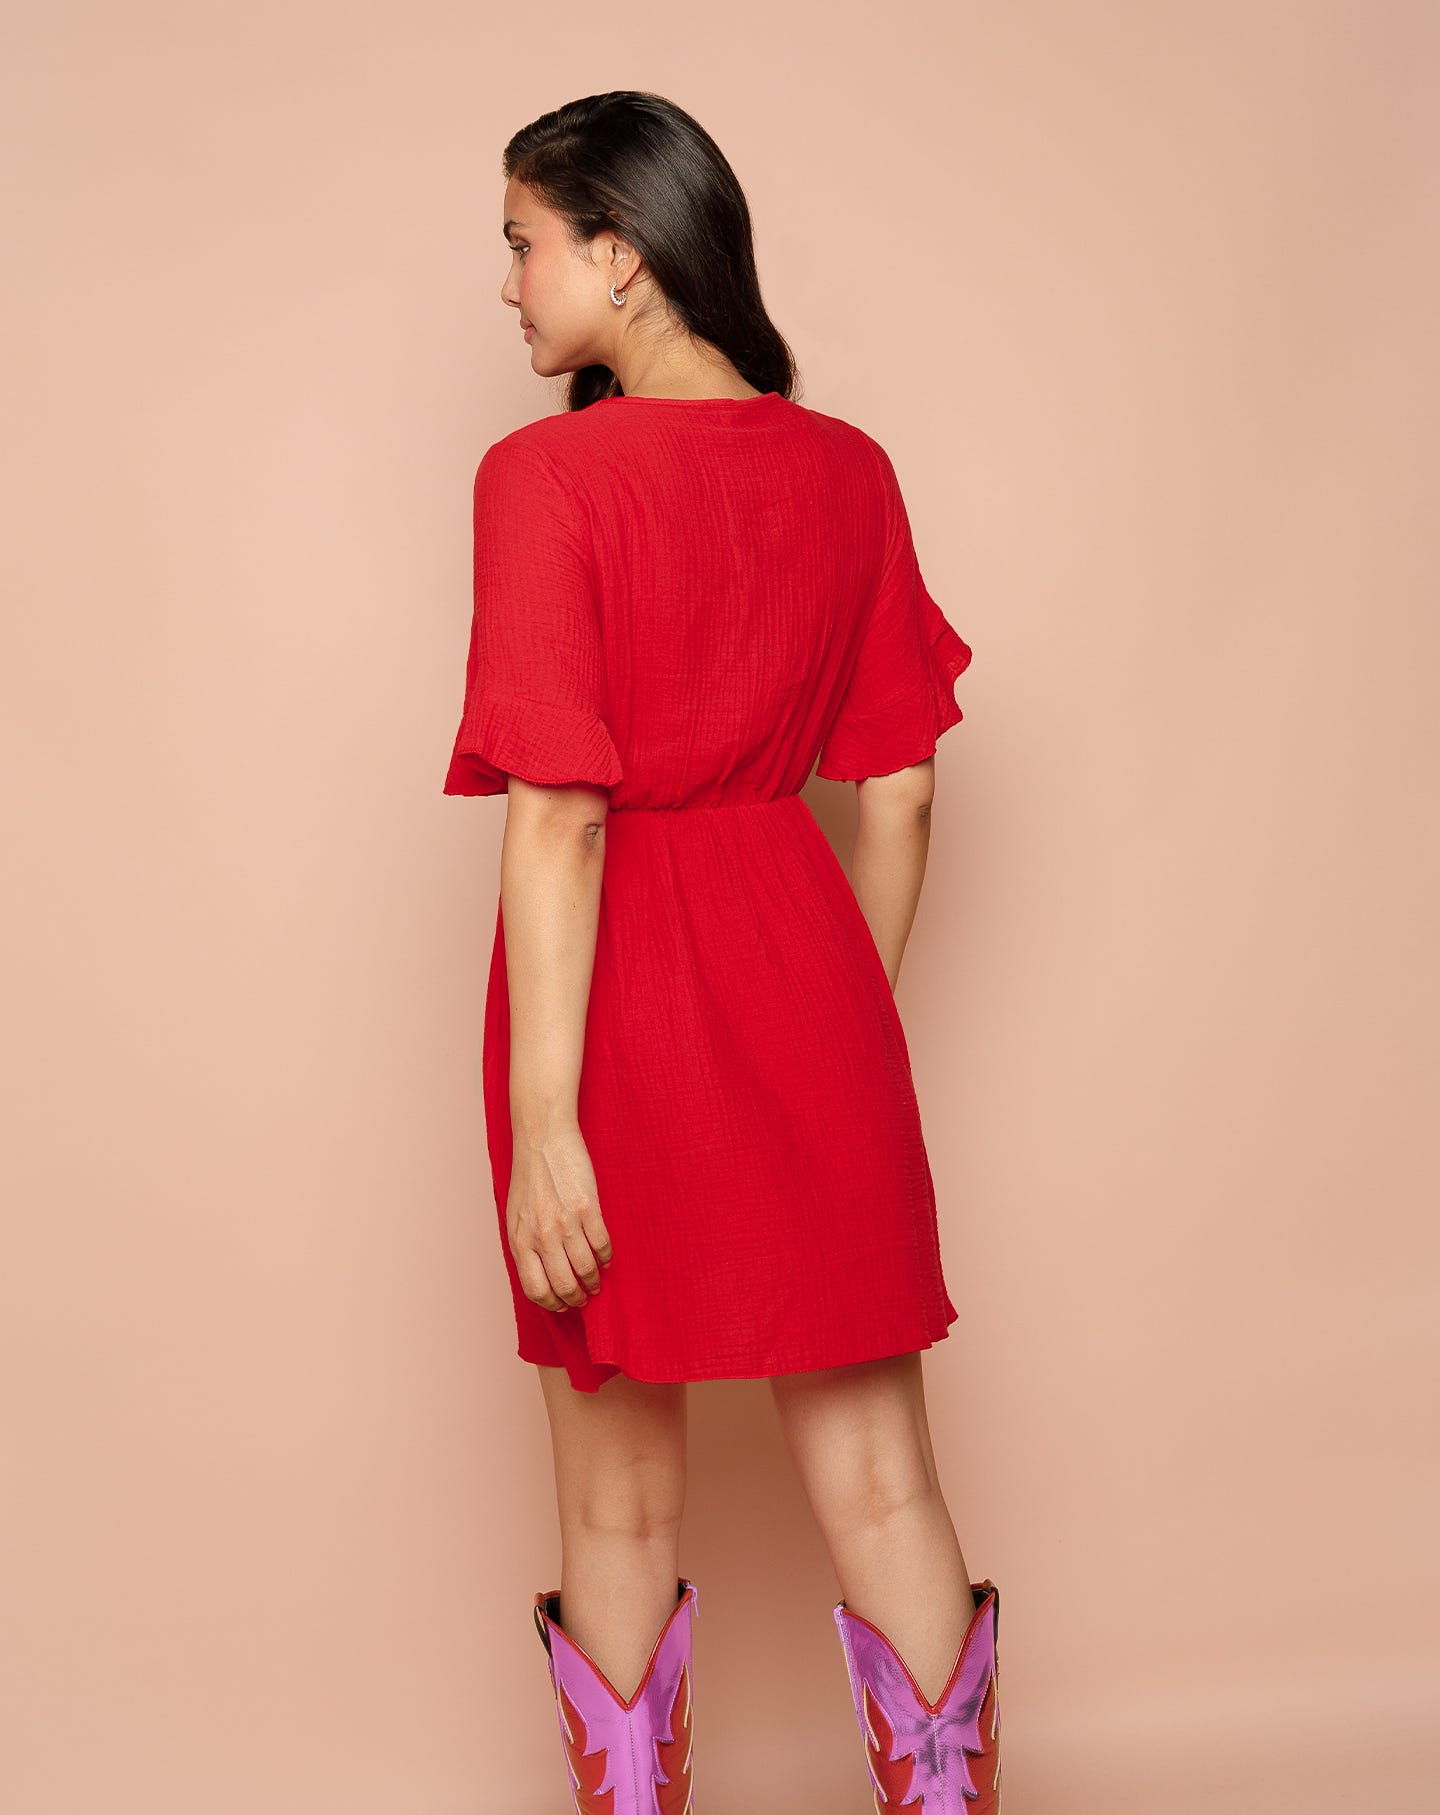 SYLVIE MUSSELINE DRESS RED